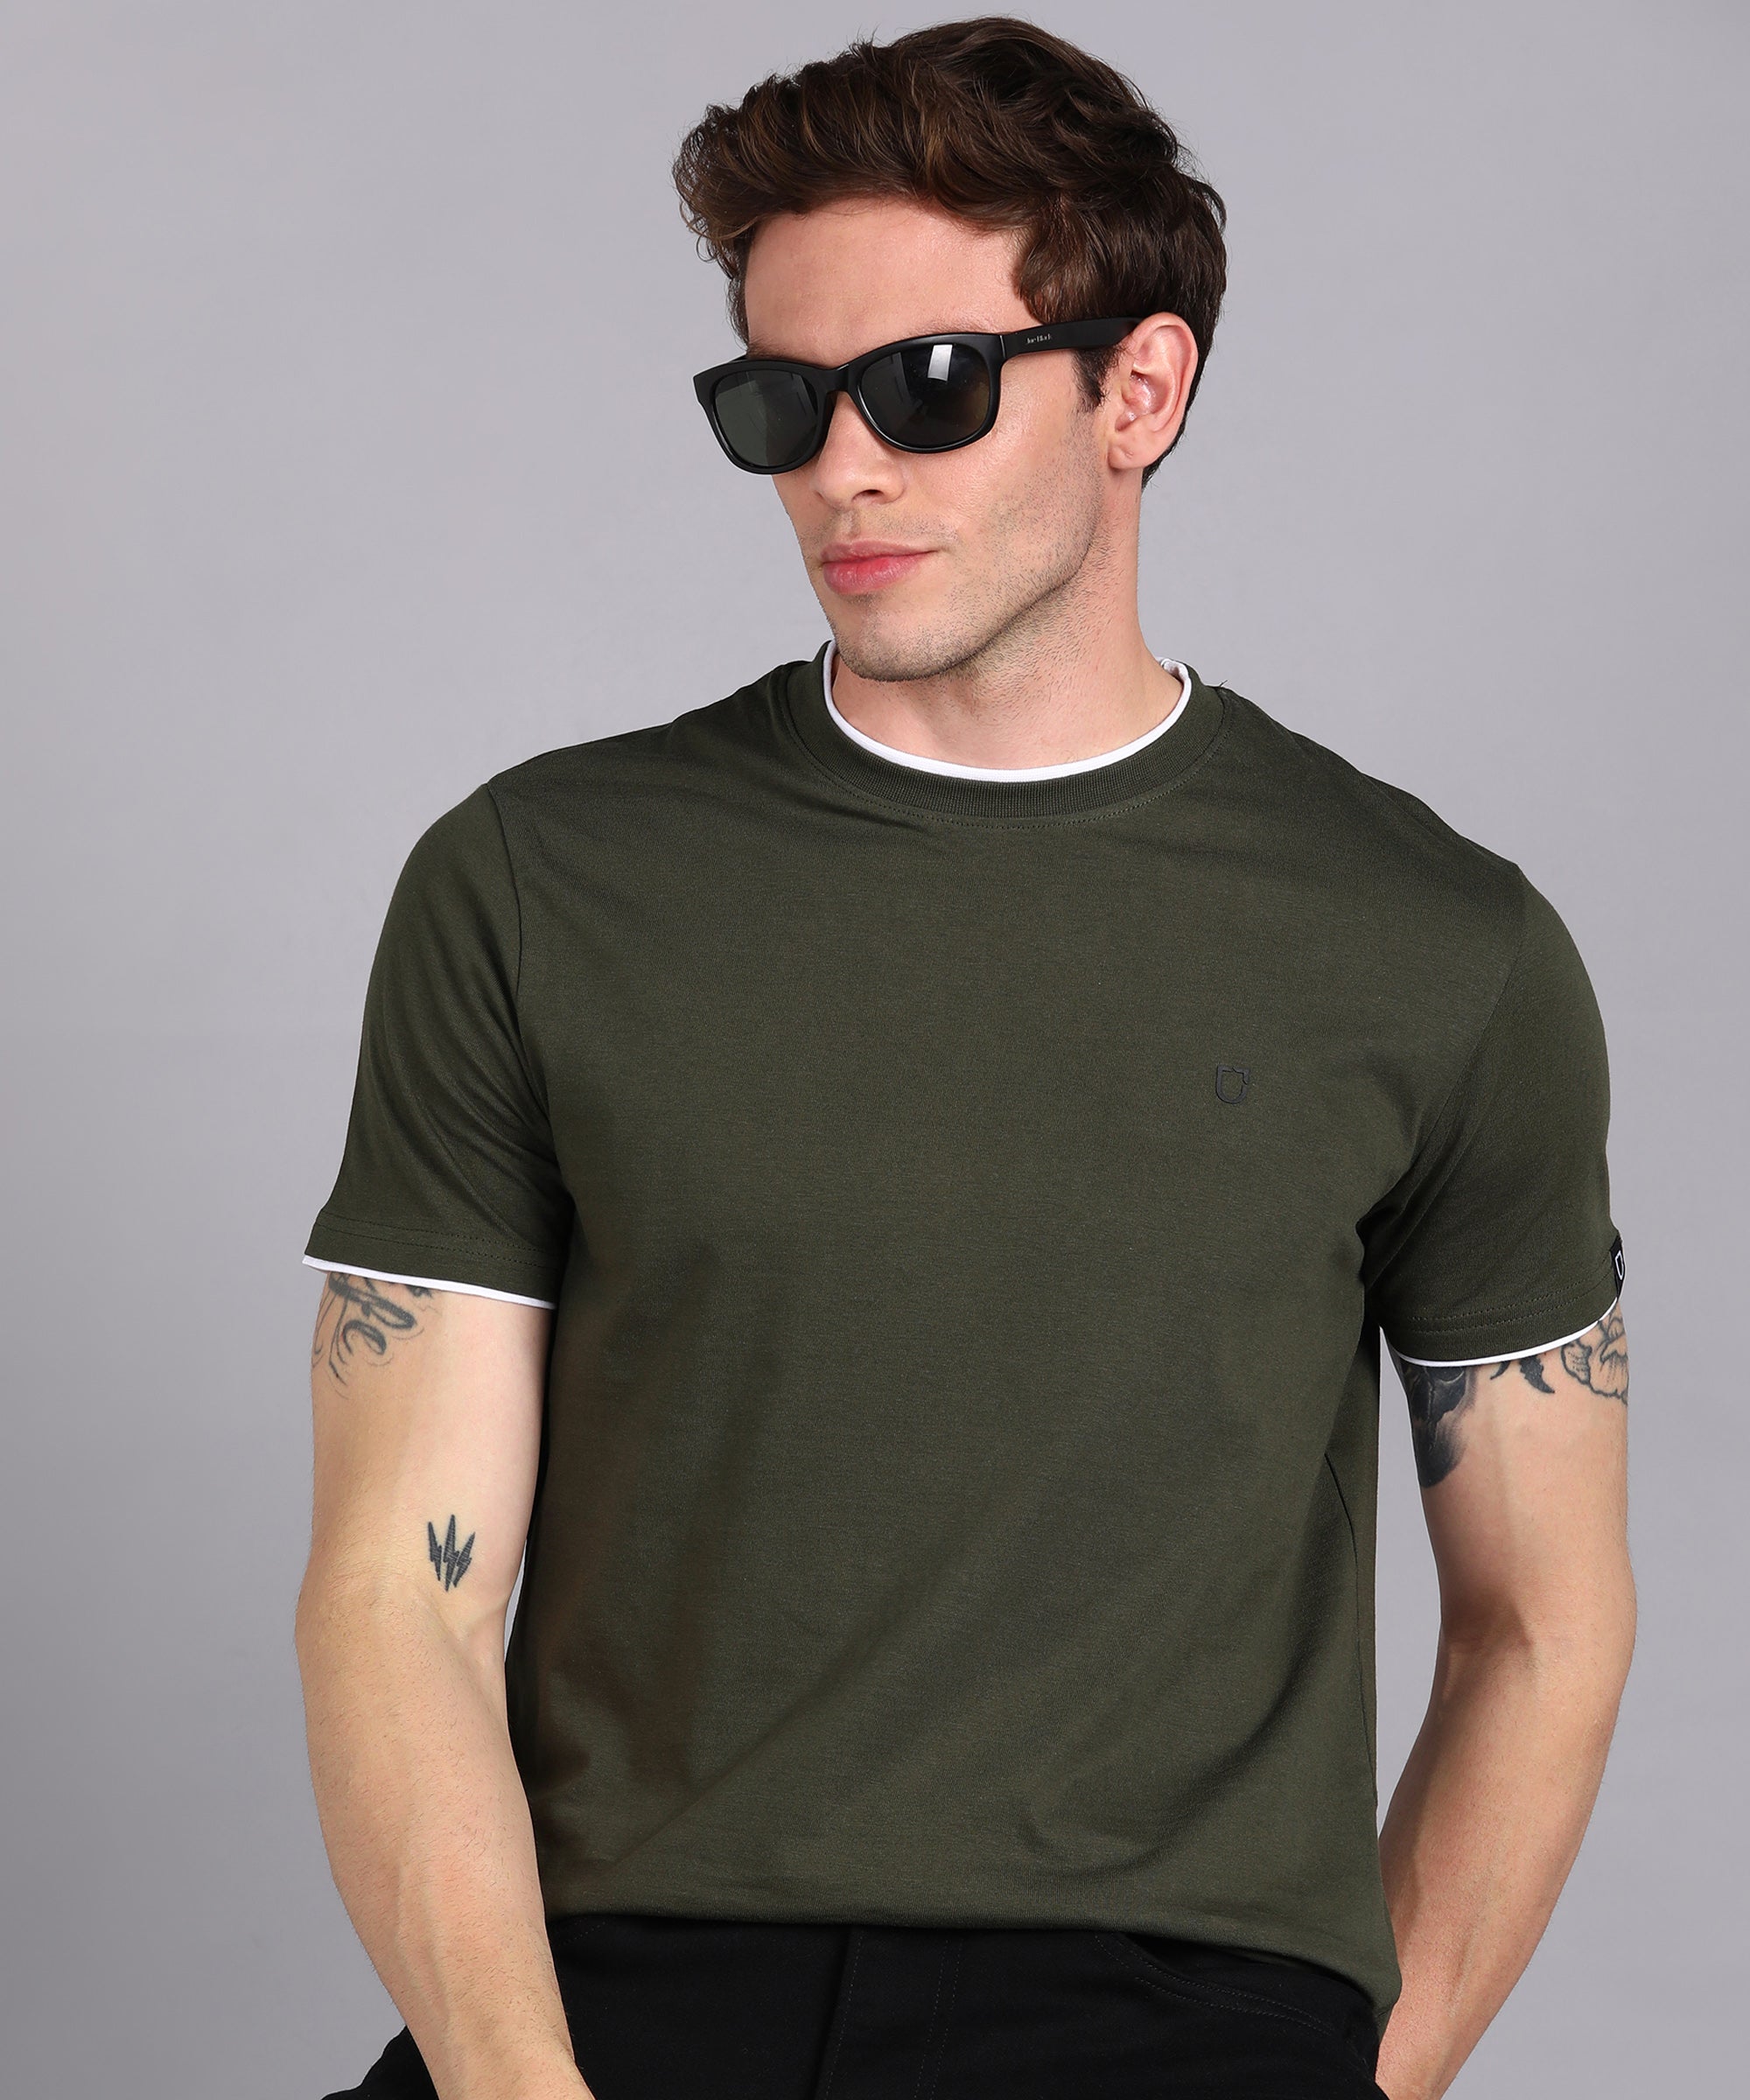 Urbano Fashion Men's Solid Olive Round Neck Half Sleeve Slim Fit Cotton T-Shirt